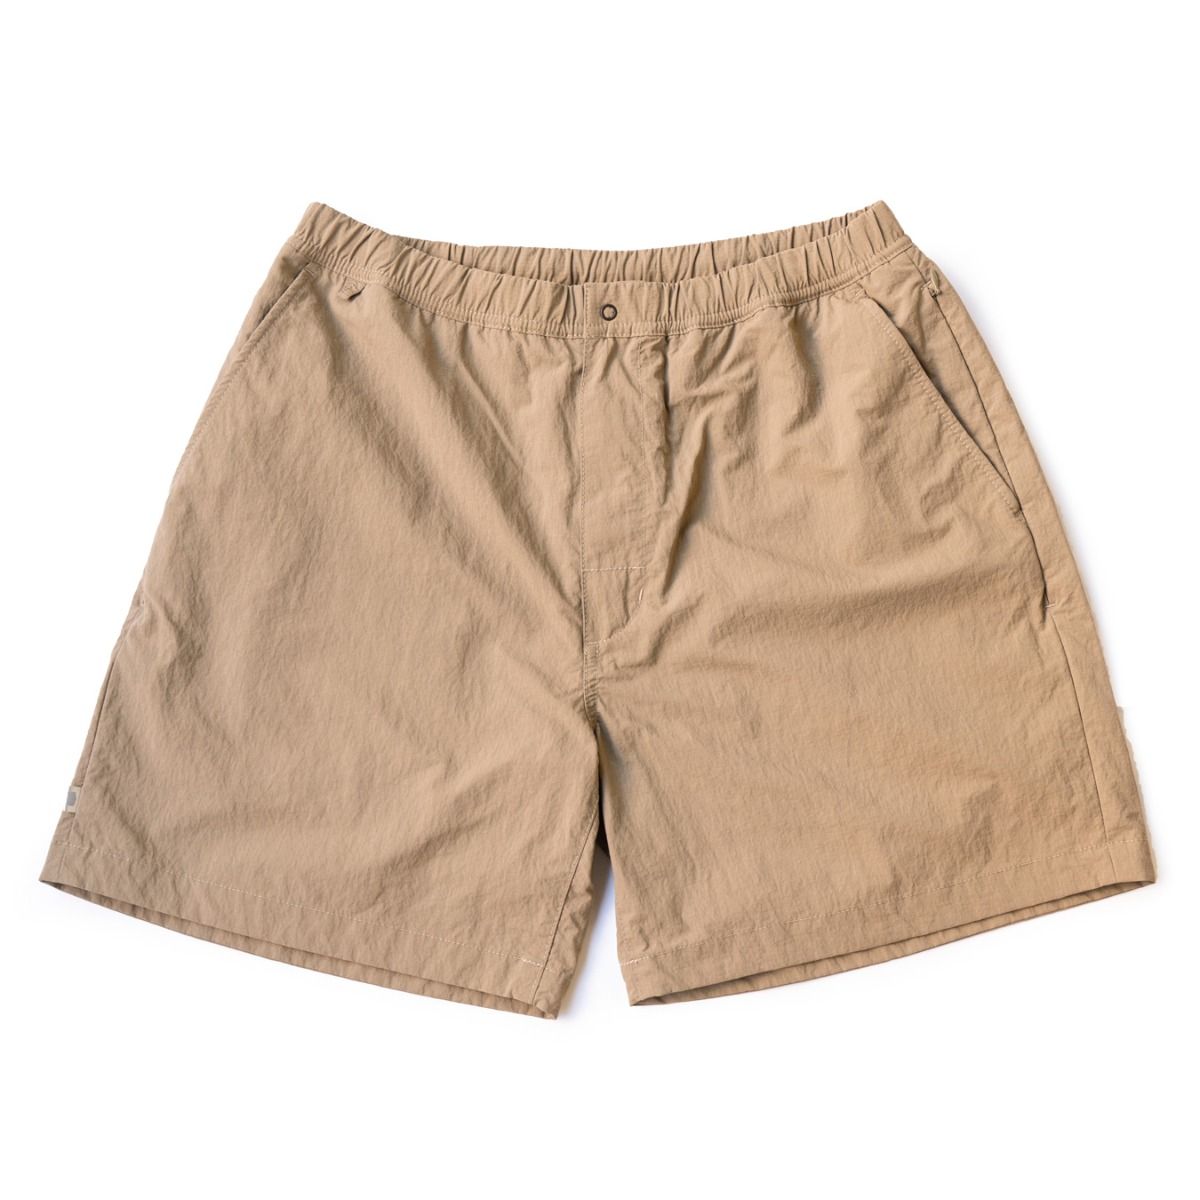 *PILGRIM* packable shorts (driftwood)